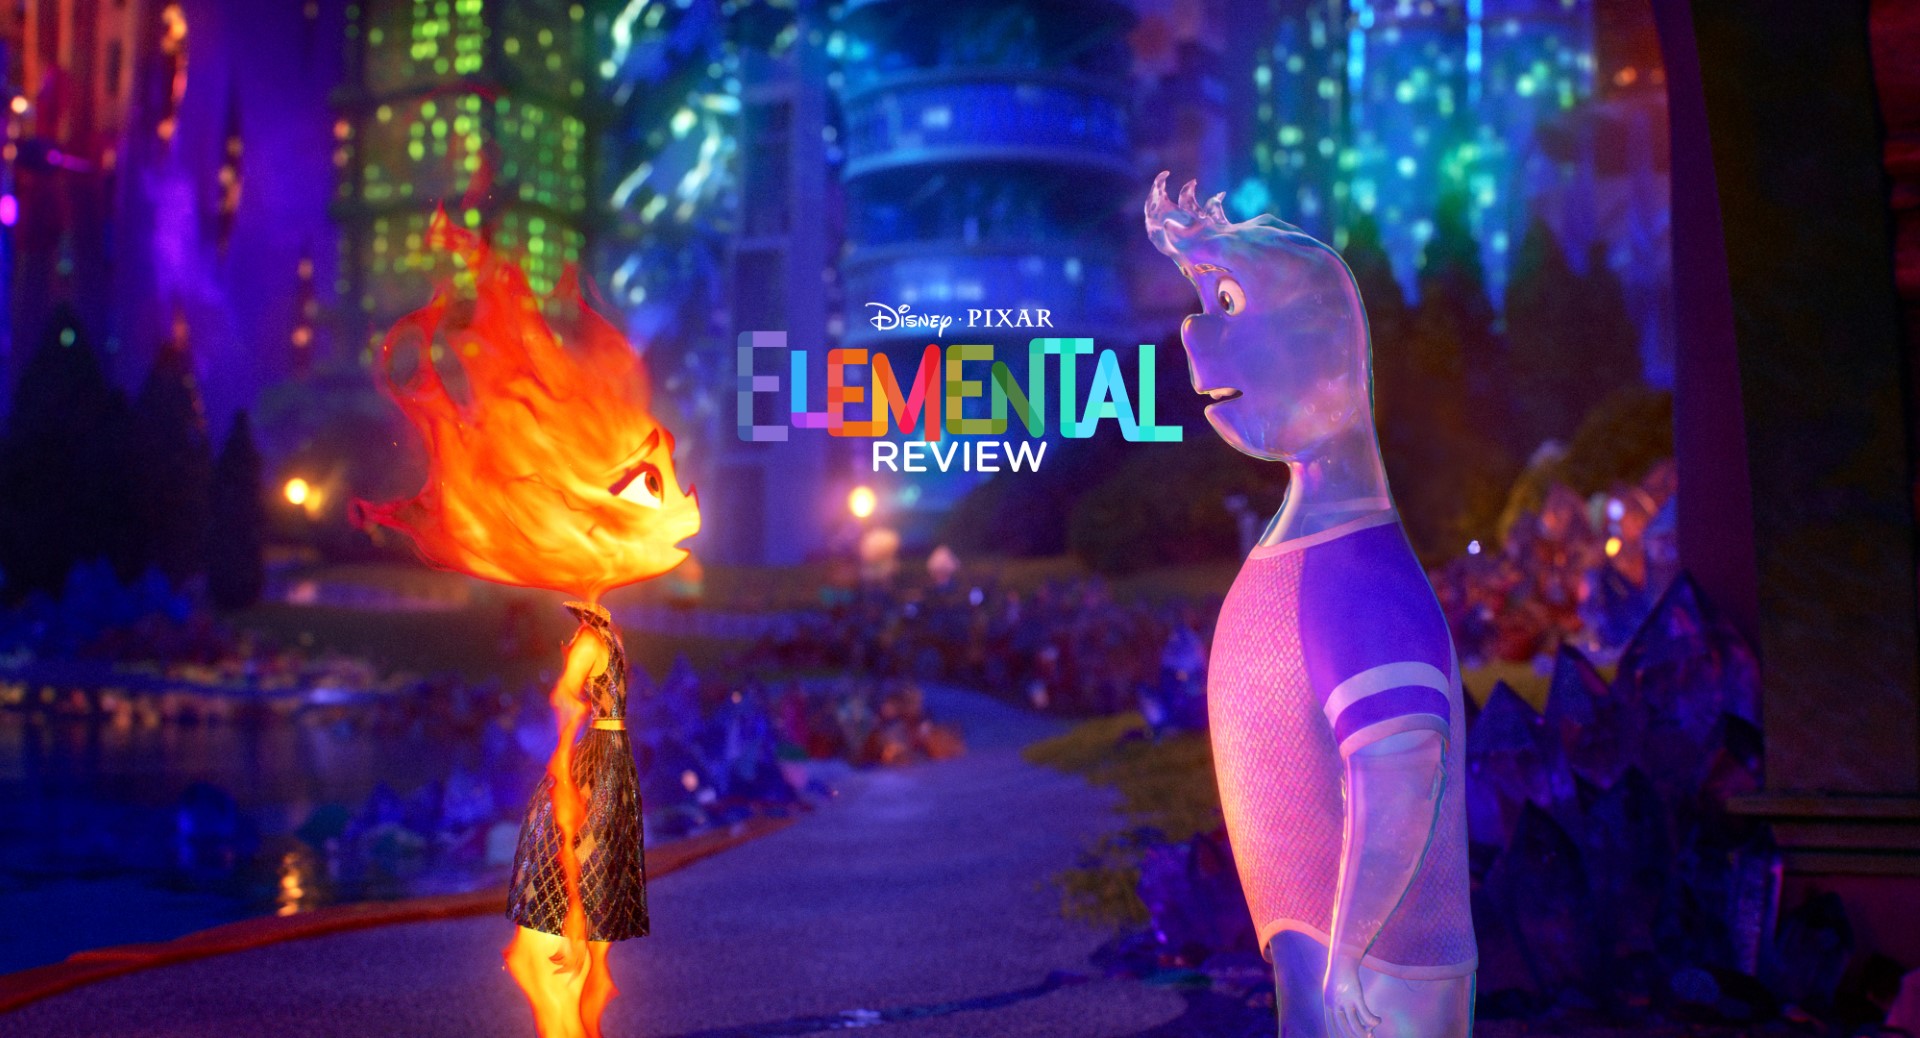 Elemental Review